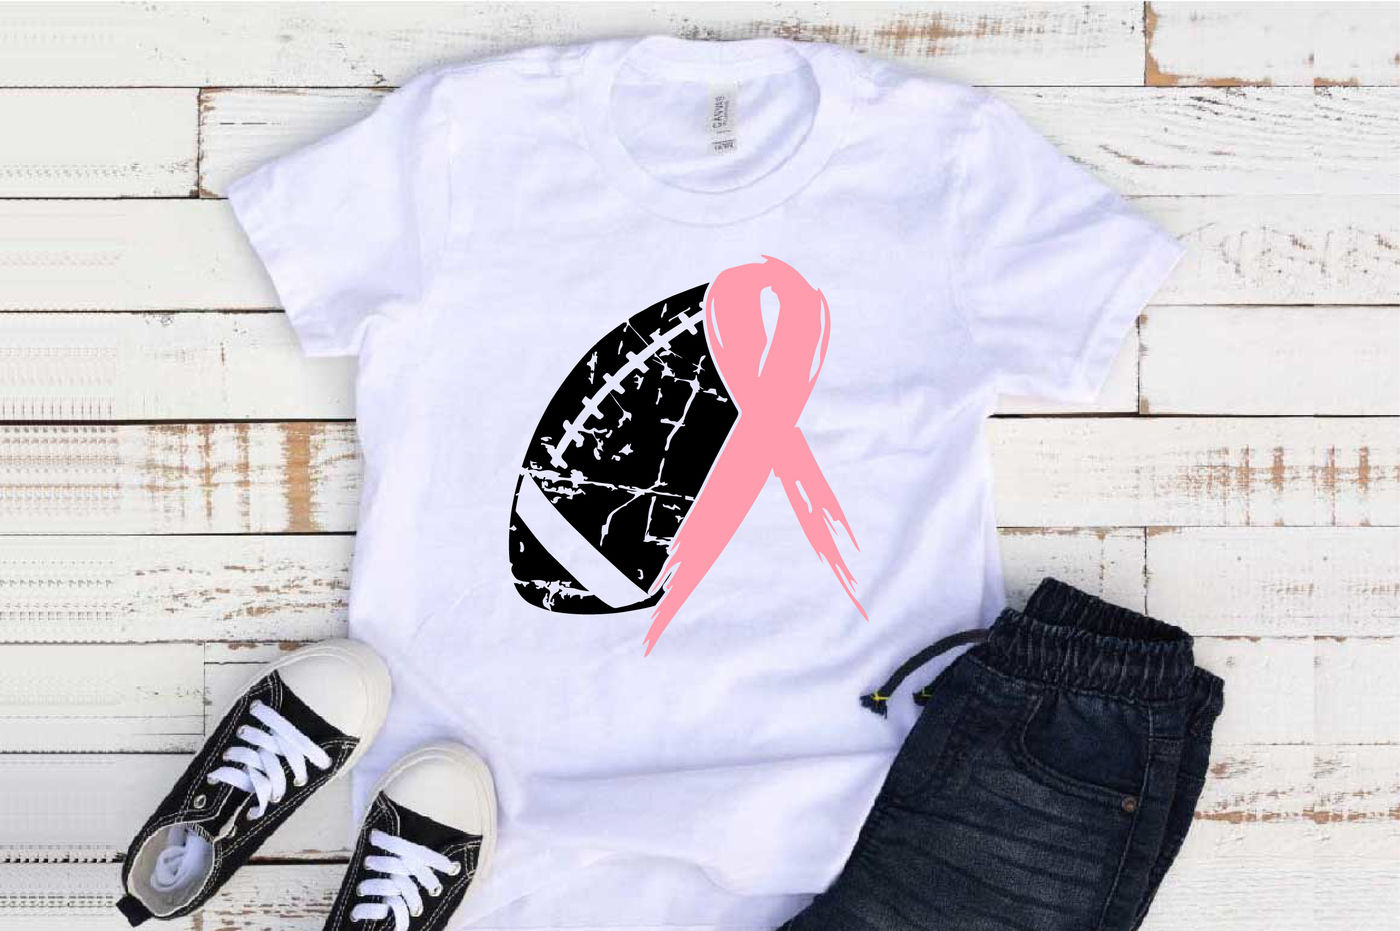 Tackle Breast Cancer Football Slang Cancer Awareness Unisex T